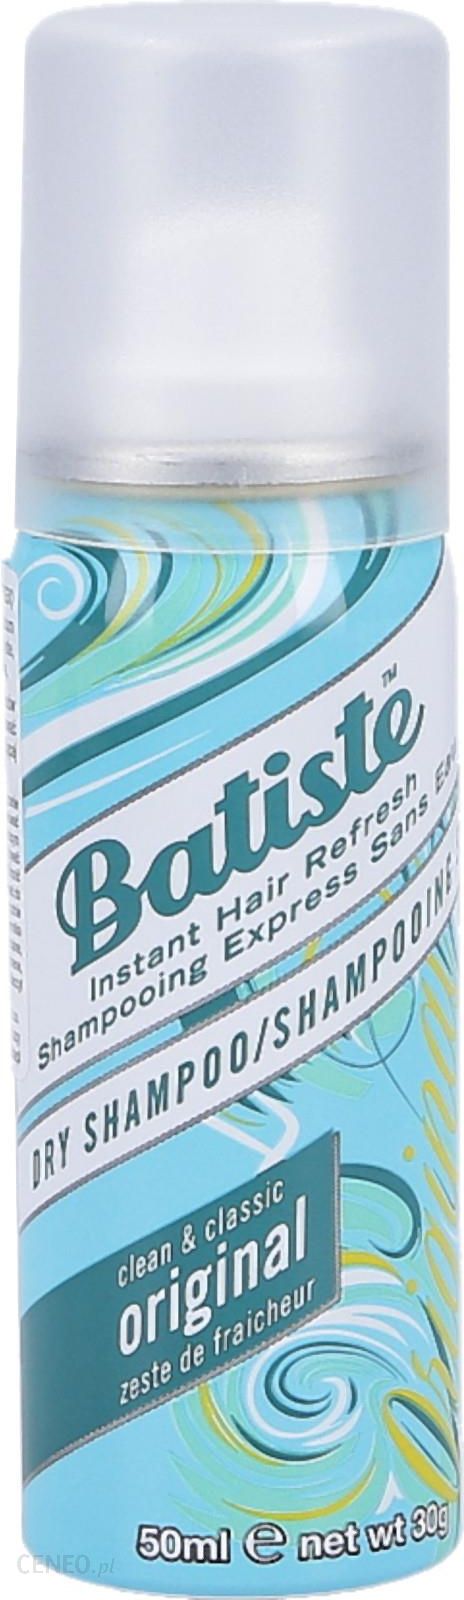 szampon batiste ceneo